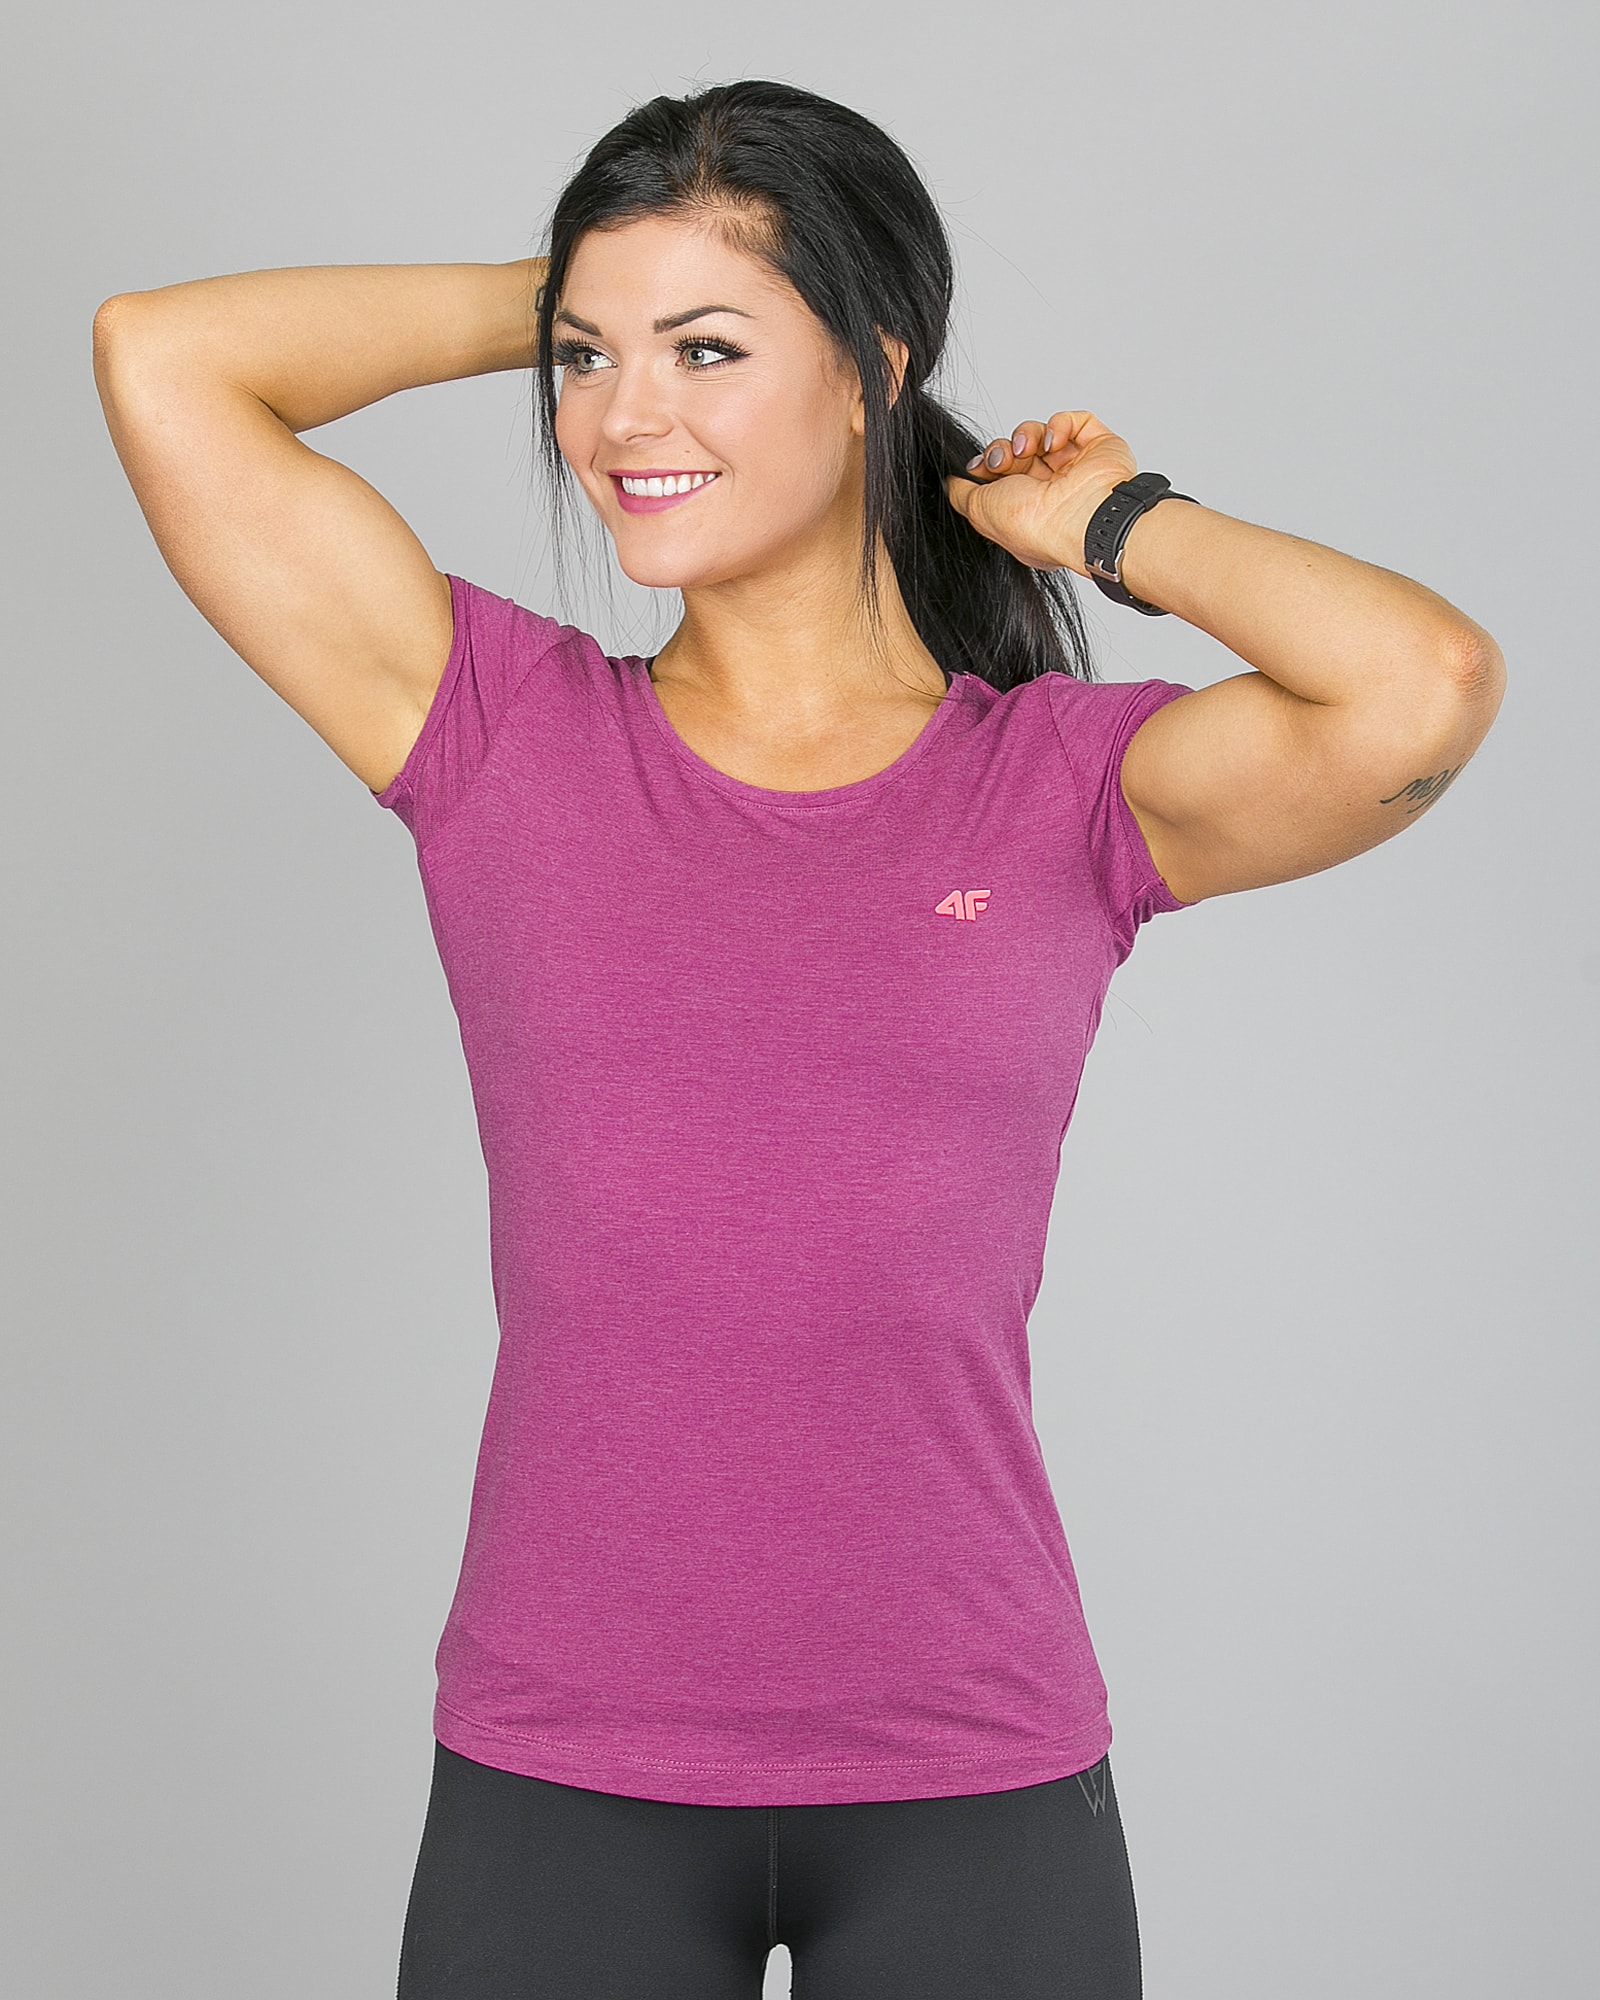 4F T-Shirt Women – Violet Purple h4z17-tsd001-958